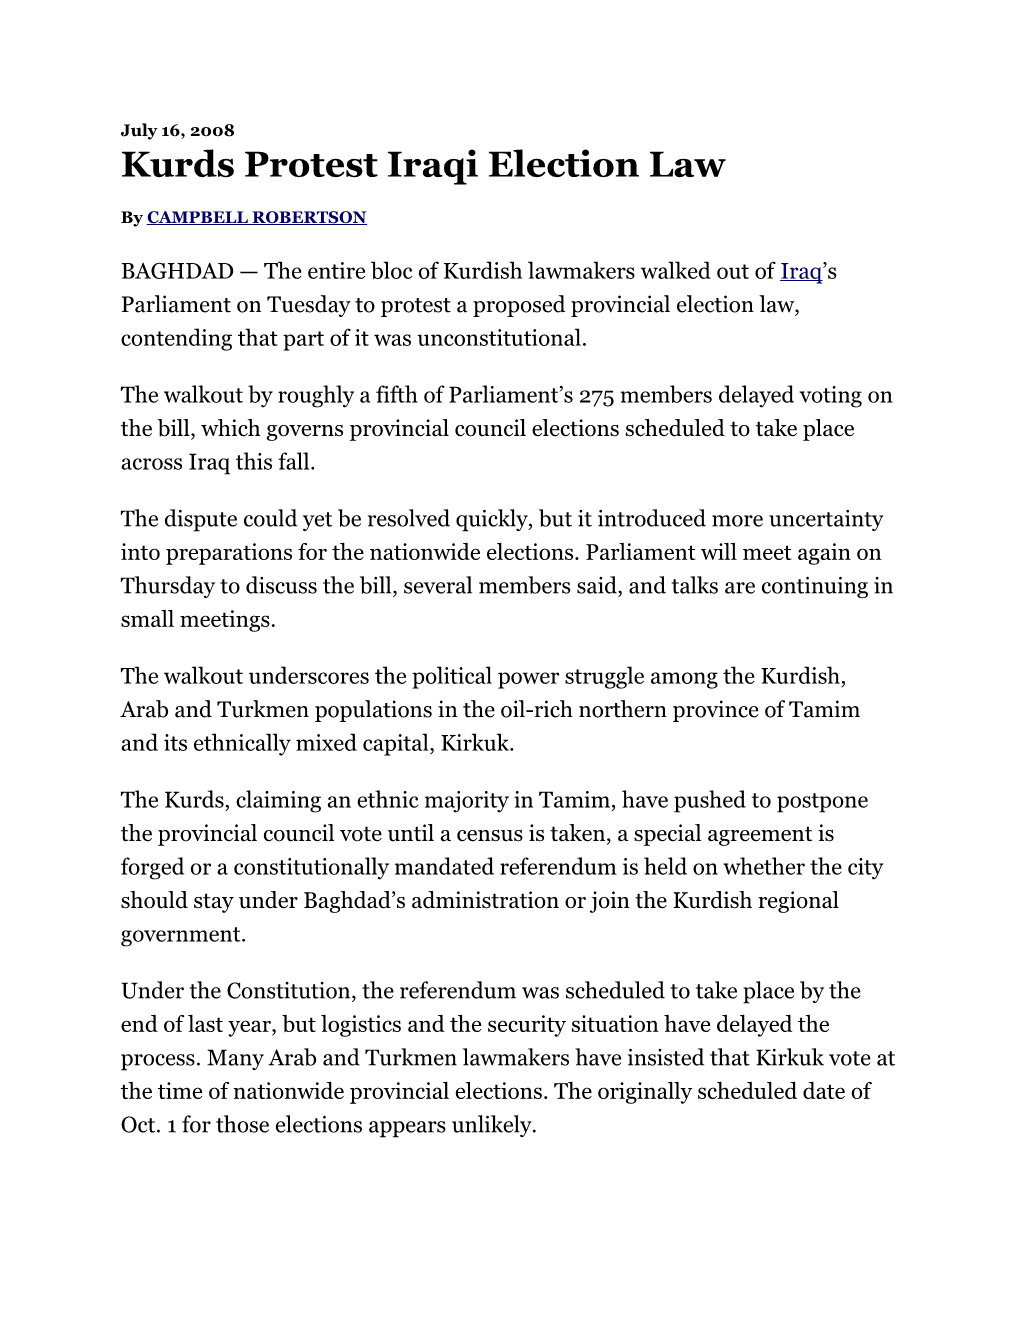 Kurds Protest Iraqi Election Law